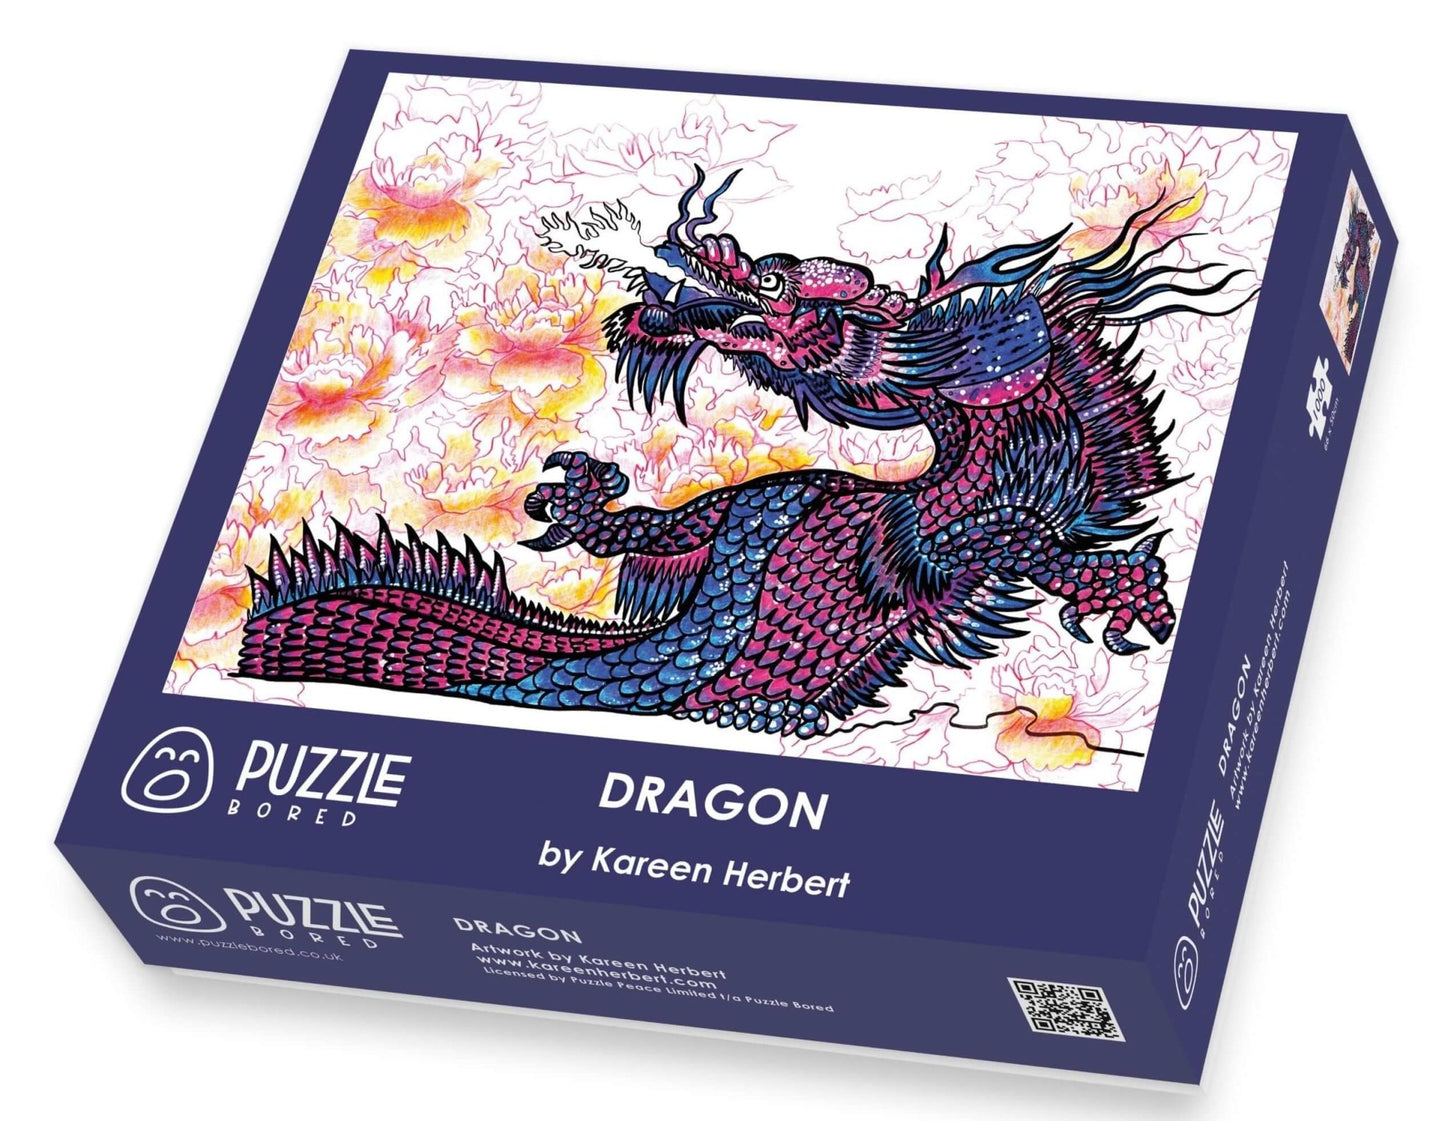 Dragon by Kareen Herbert - Puzzle Bored